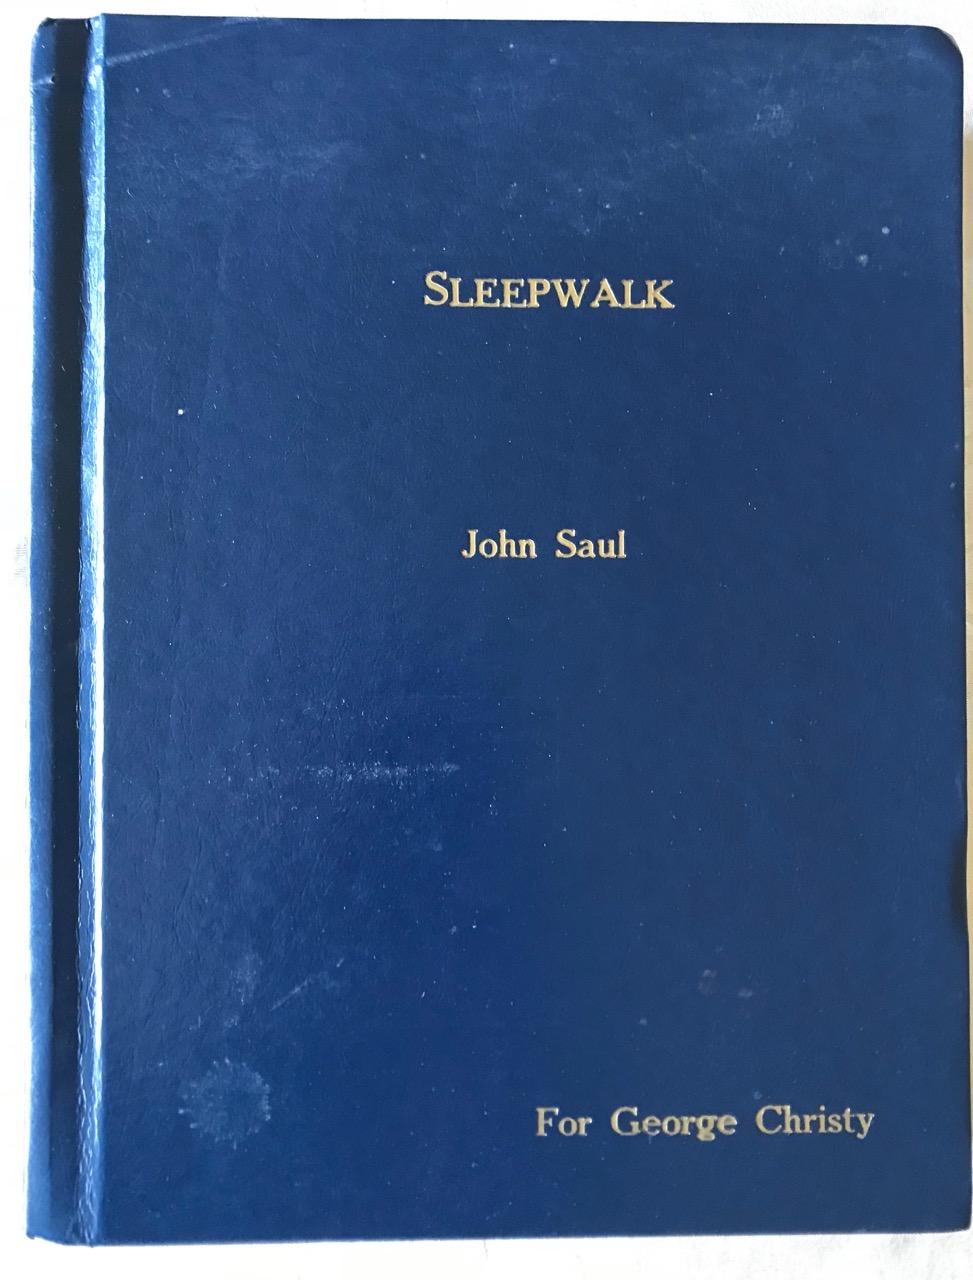 Image for Sleepwalk [Limited, signed hardbound edition]